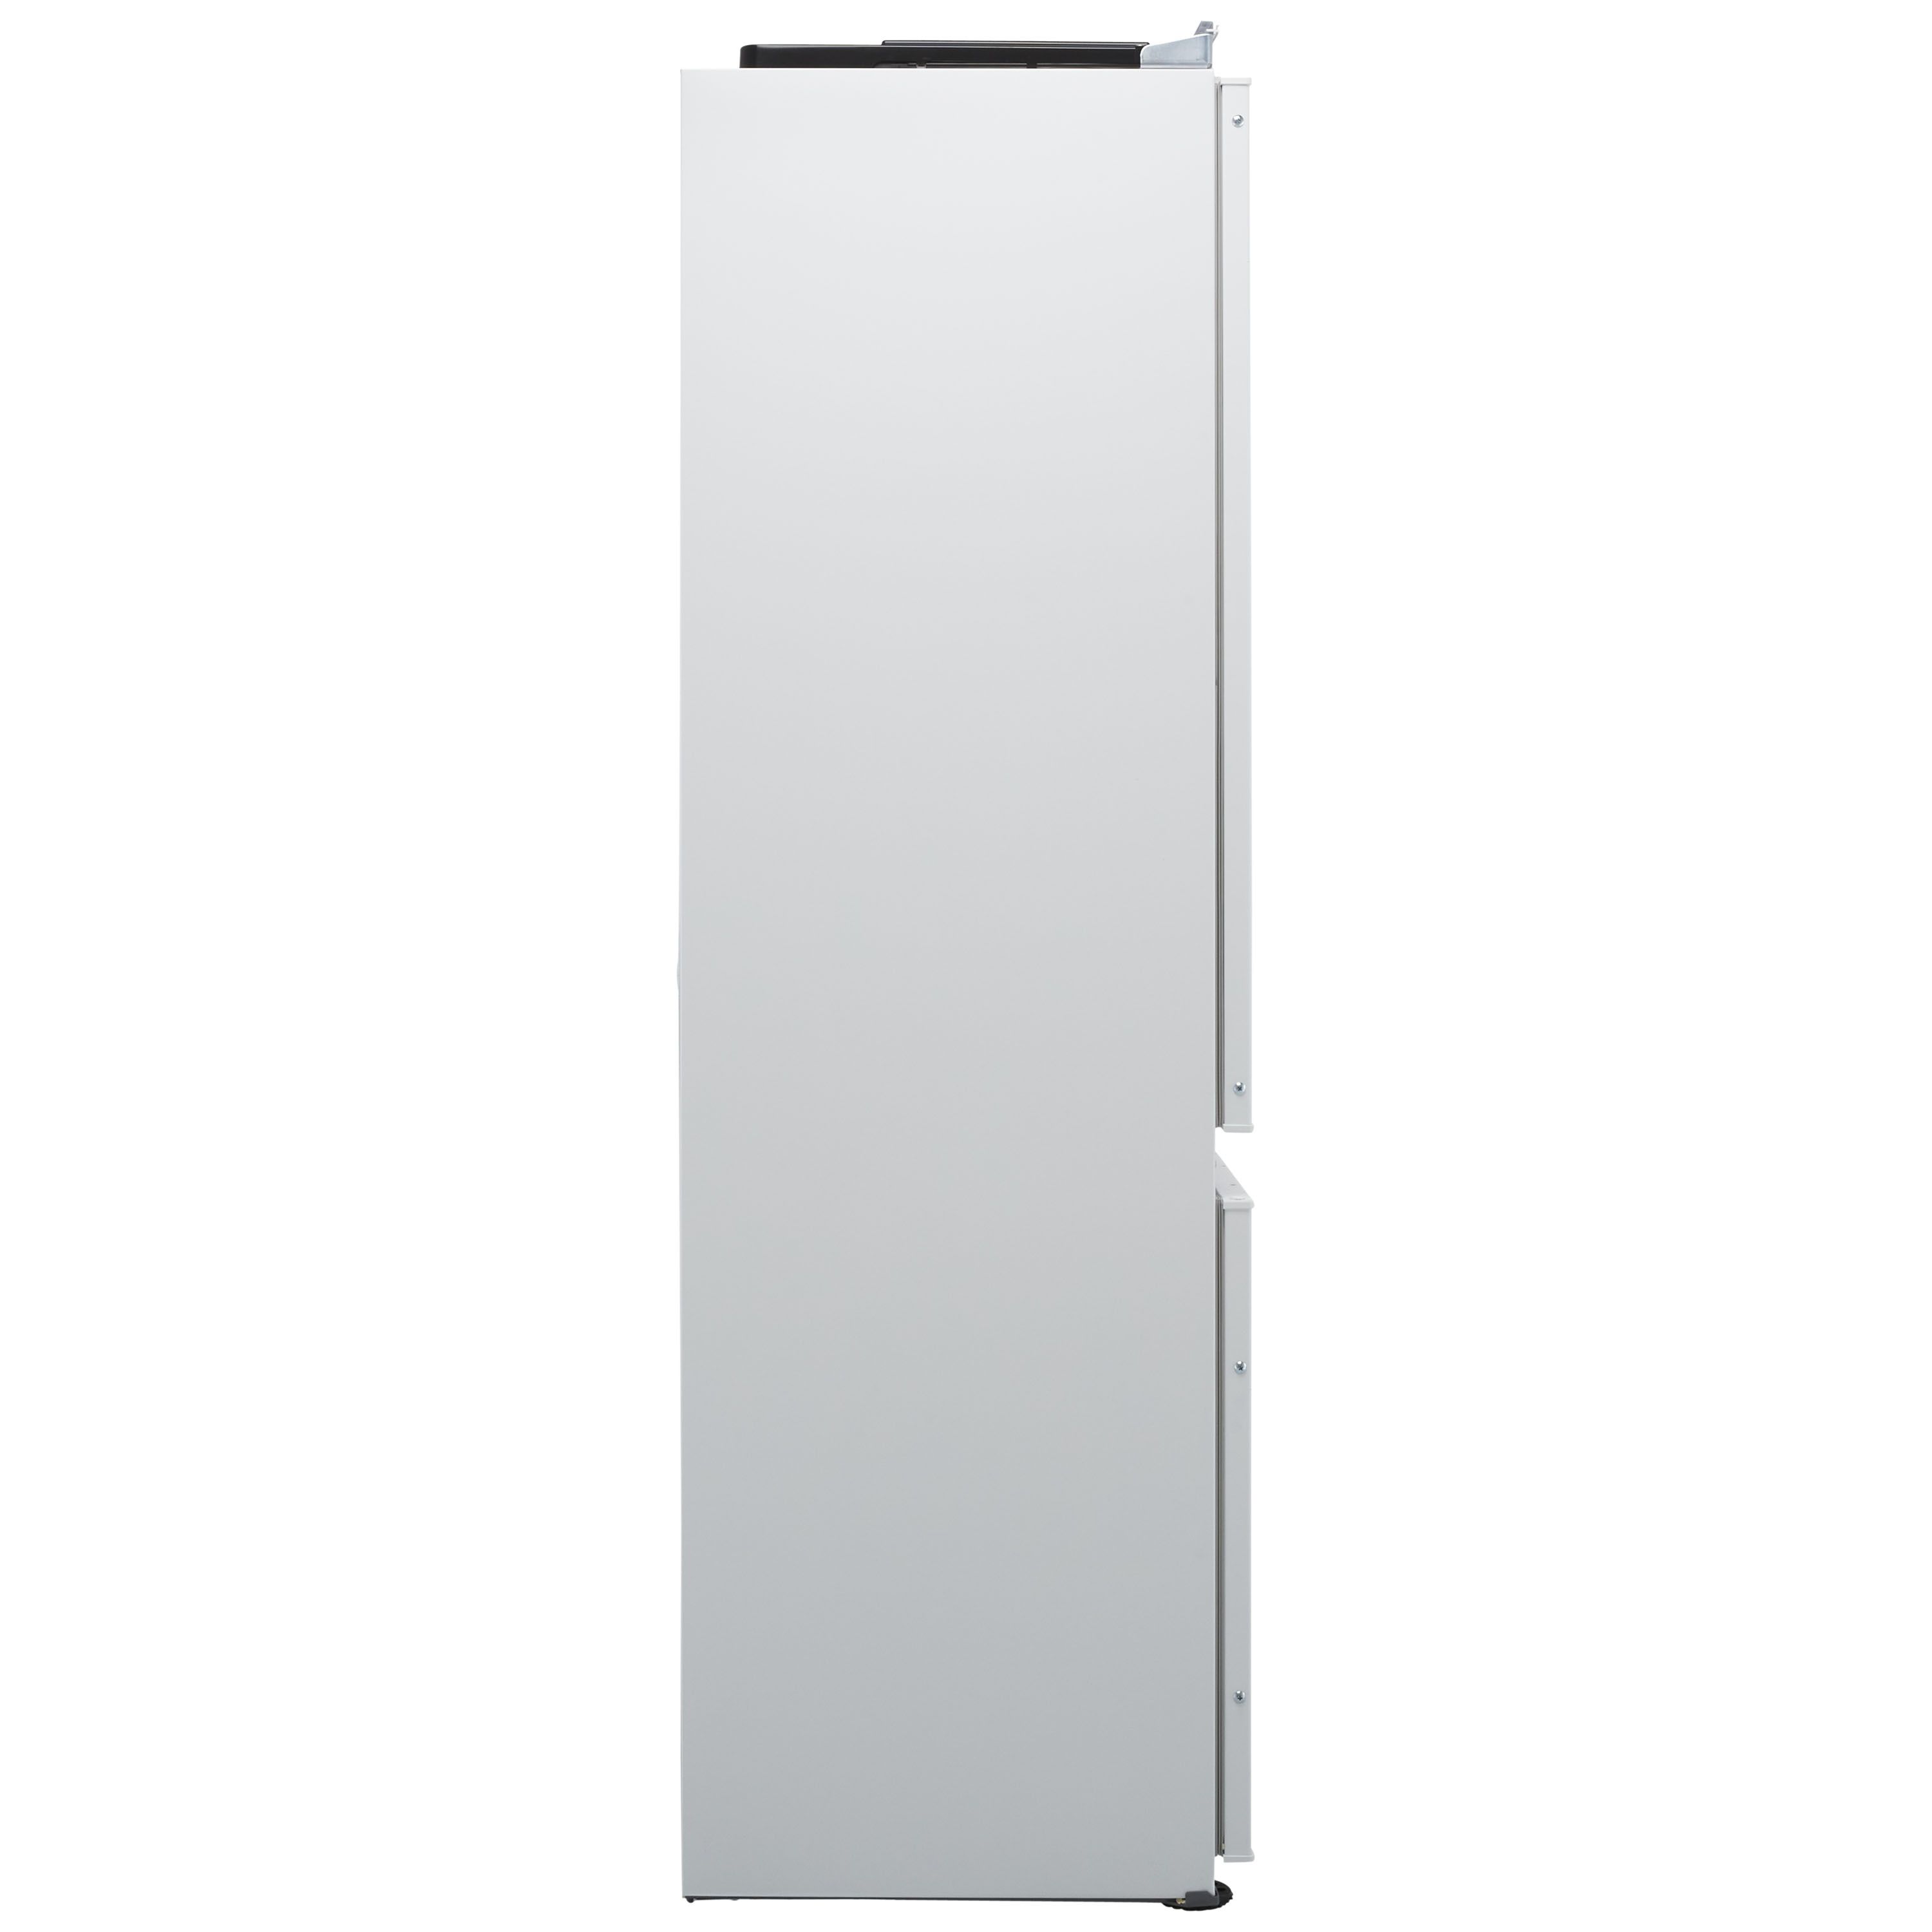 Samsung BRB26600FWW_WH 70:30 Built-in Frost free Fridge freezer - White